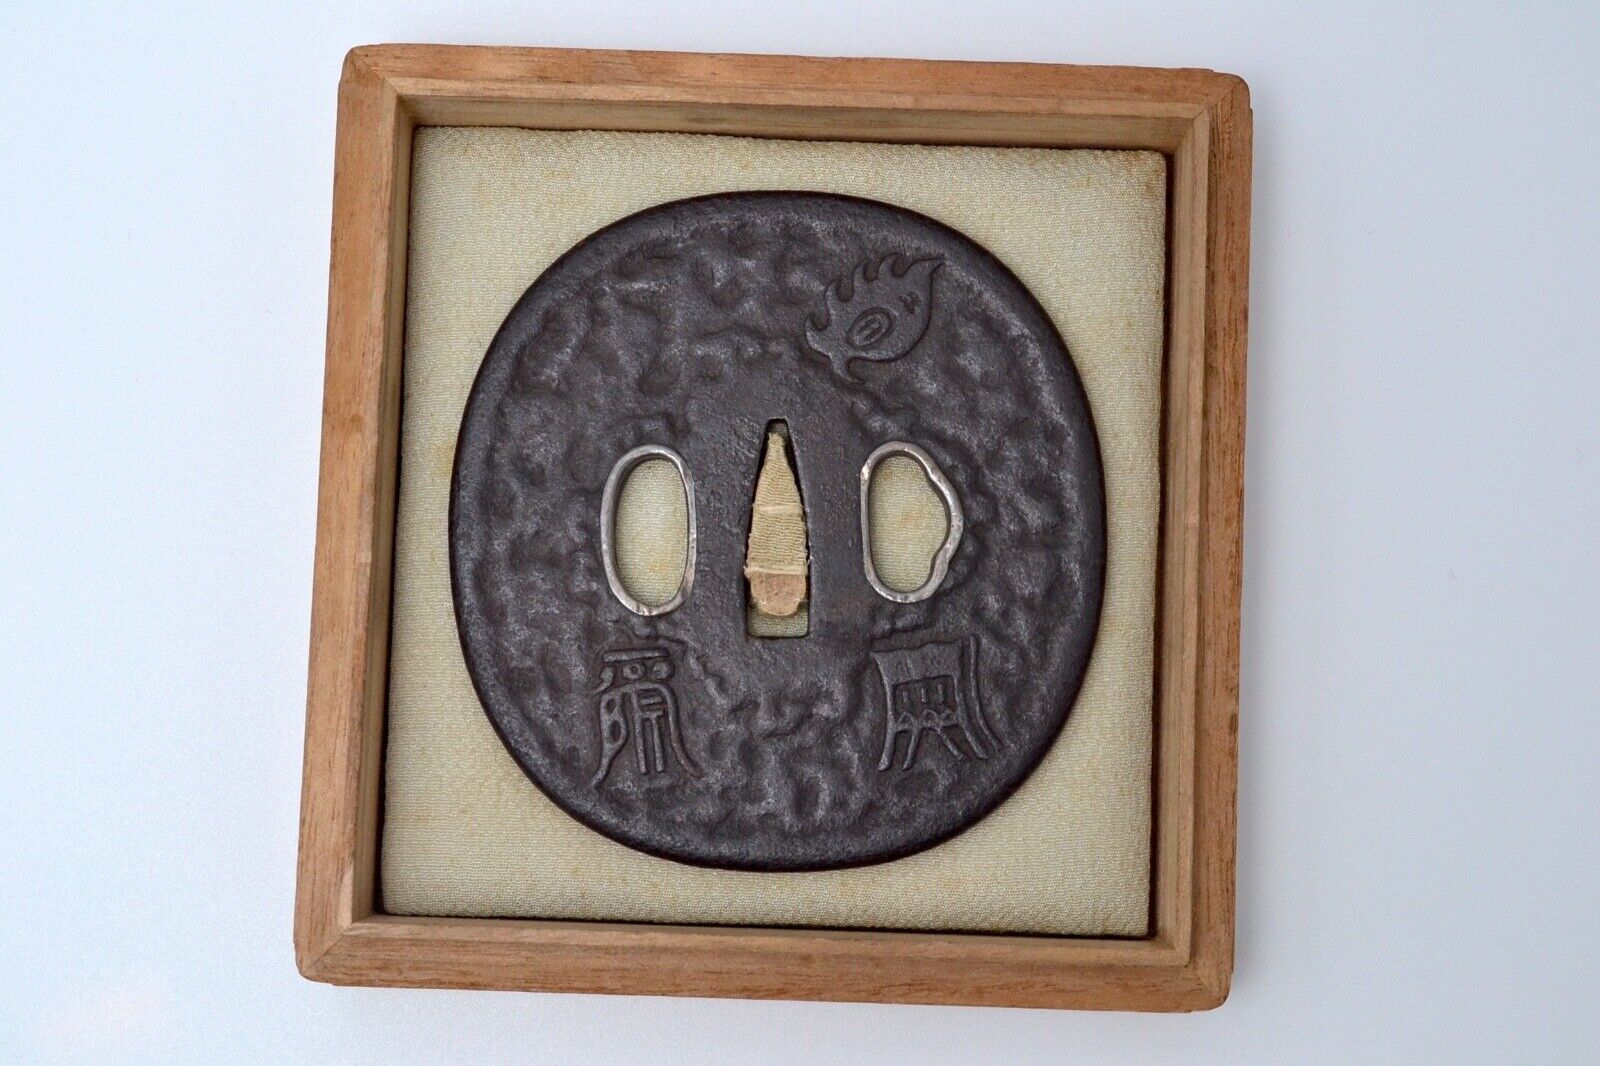 Tsuba Japanese antique Iron Mumei Bonji Sanskrit characters design Edo era